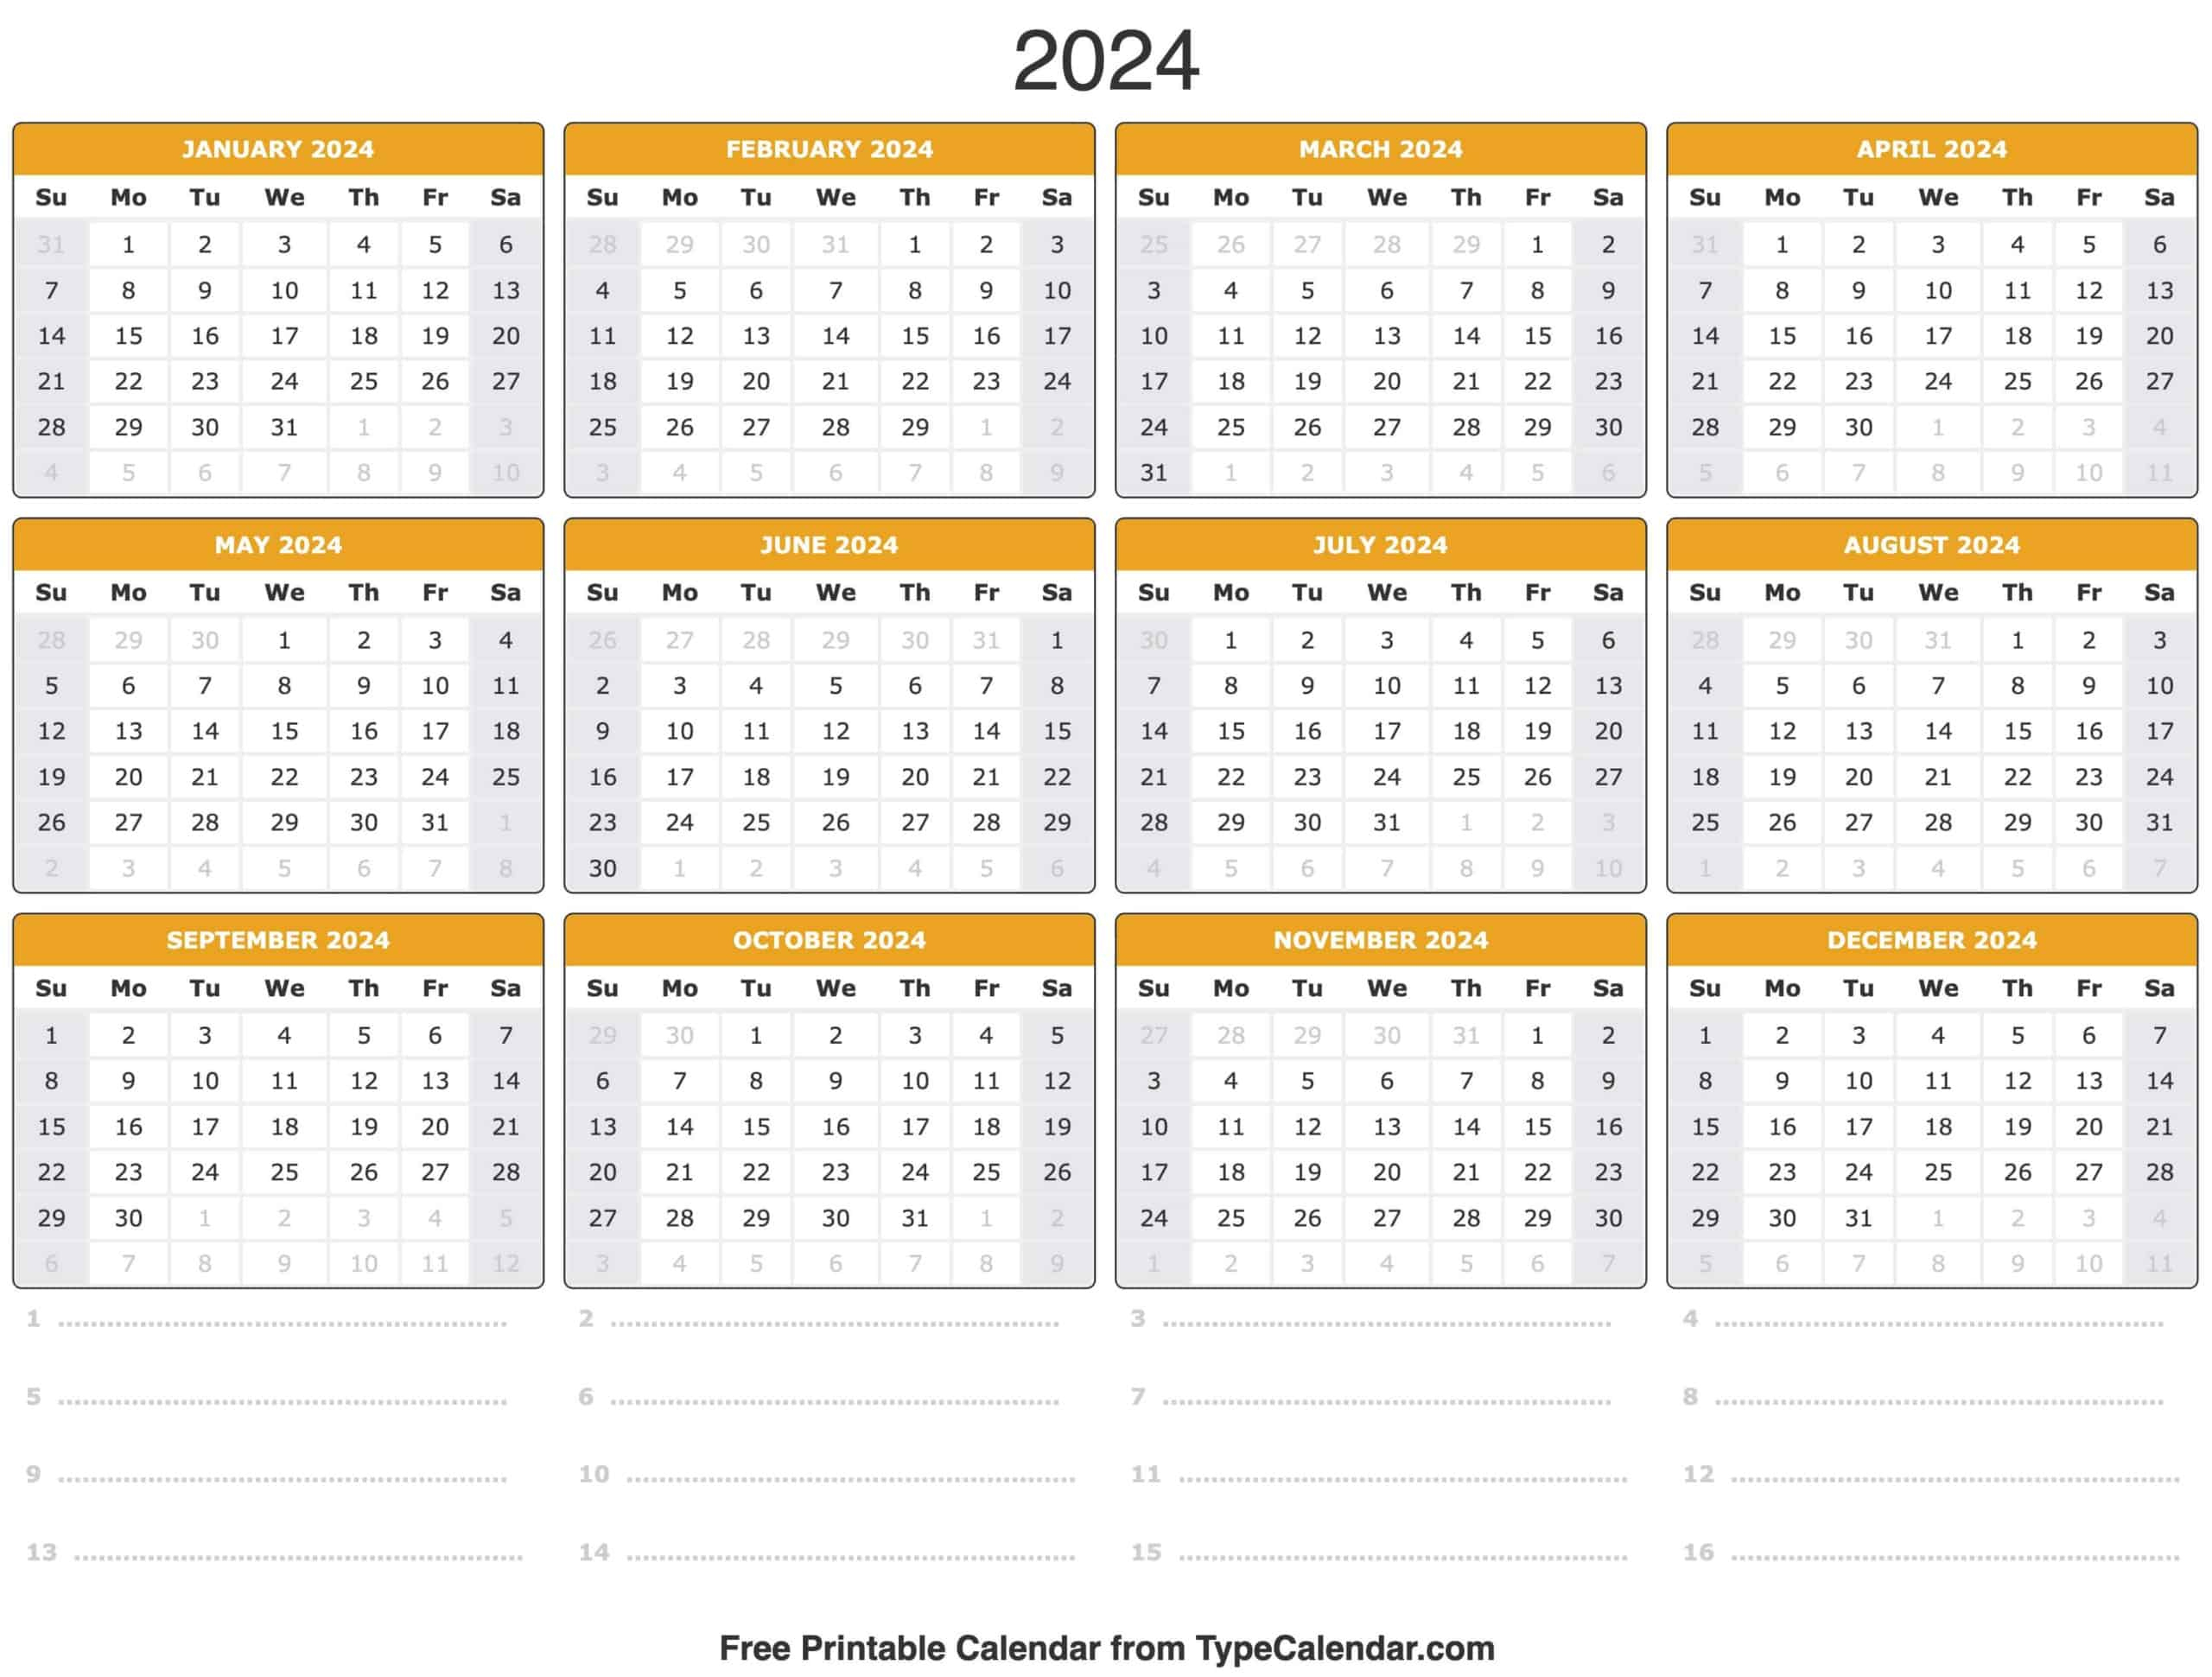 2024 Calendar: Free Printable Calendar With Holidays | Printable Calendar 2024 Annual